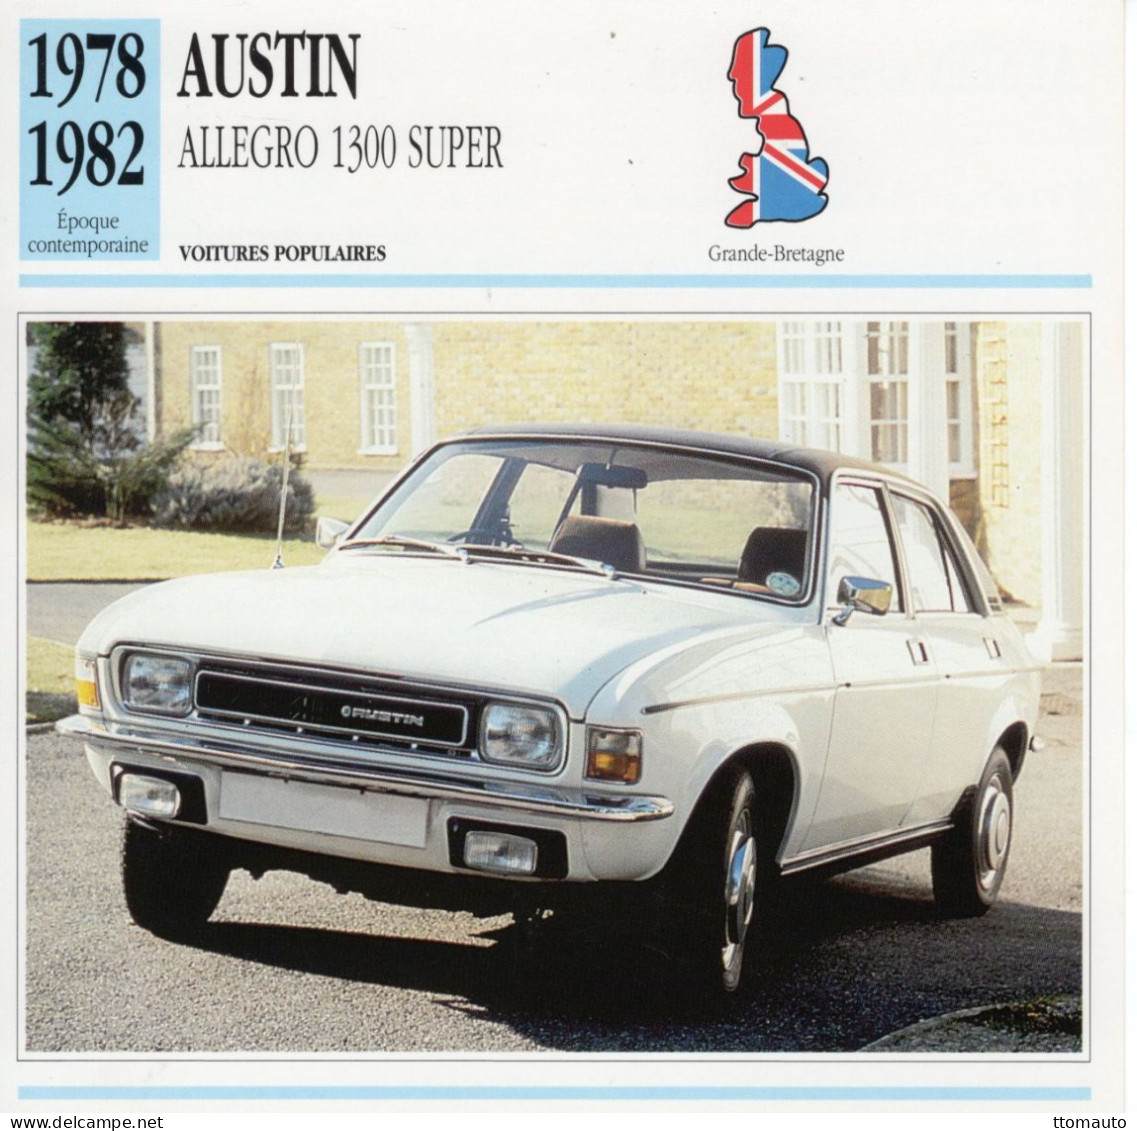 Austin Allegro 1300 Super -  1980  - Voiture Populaire -  Fiche Technique Automobile (GB) - Cars